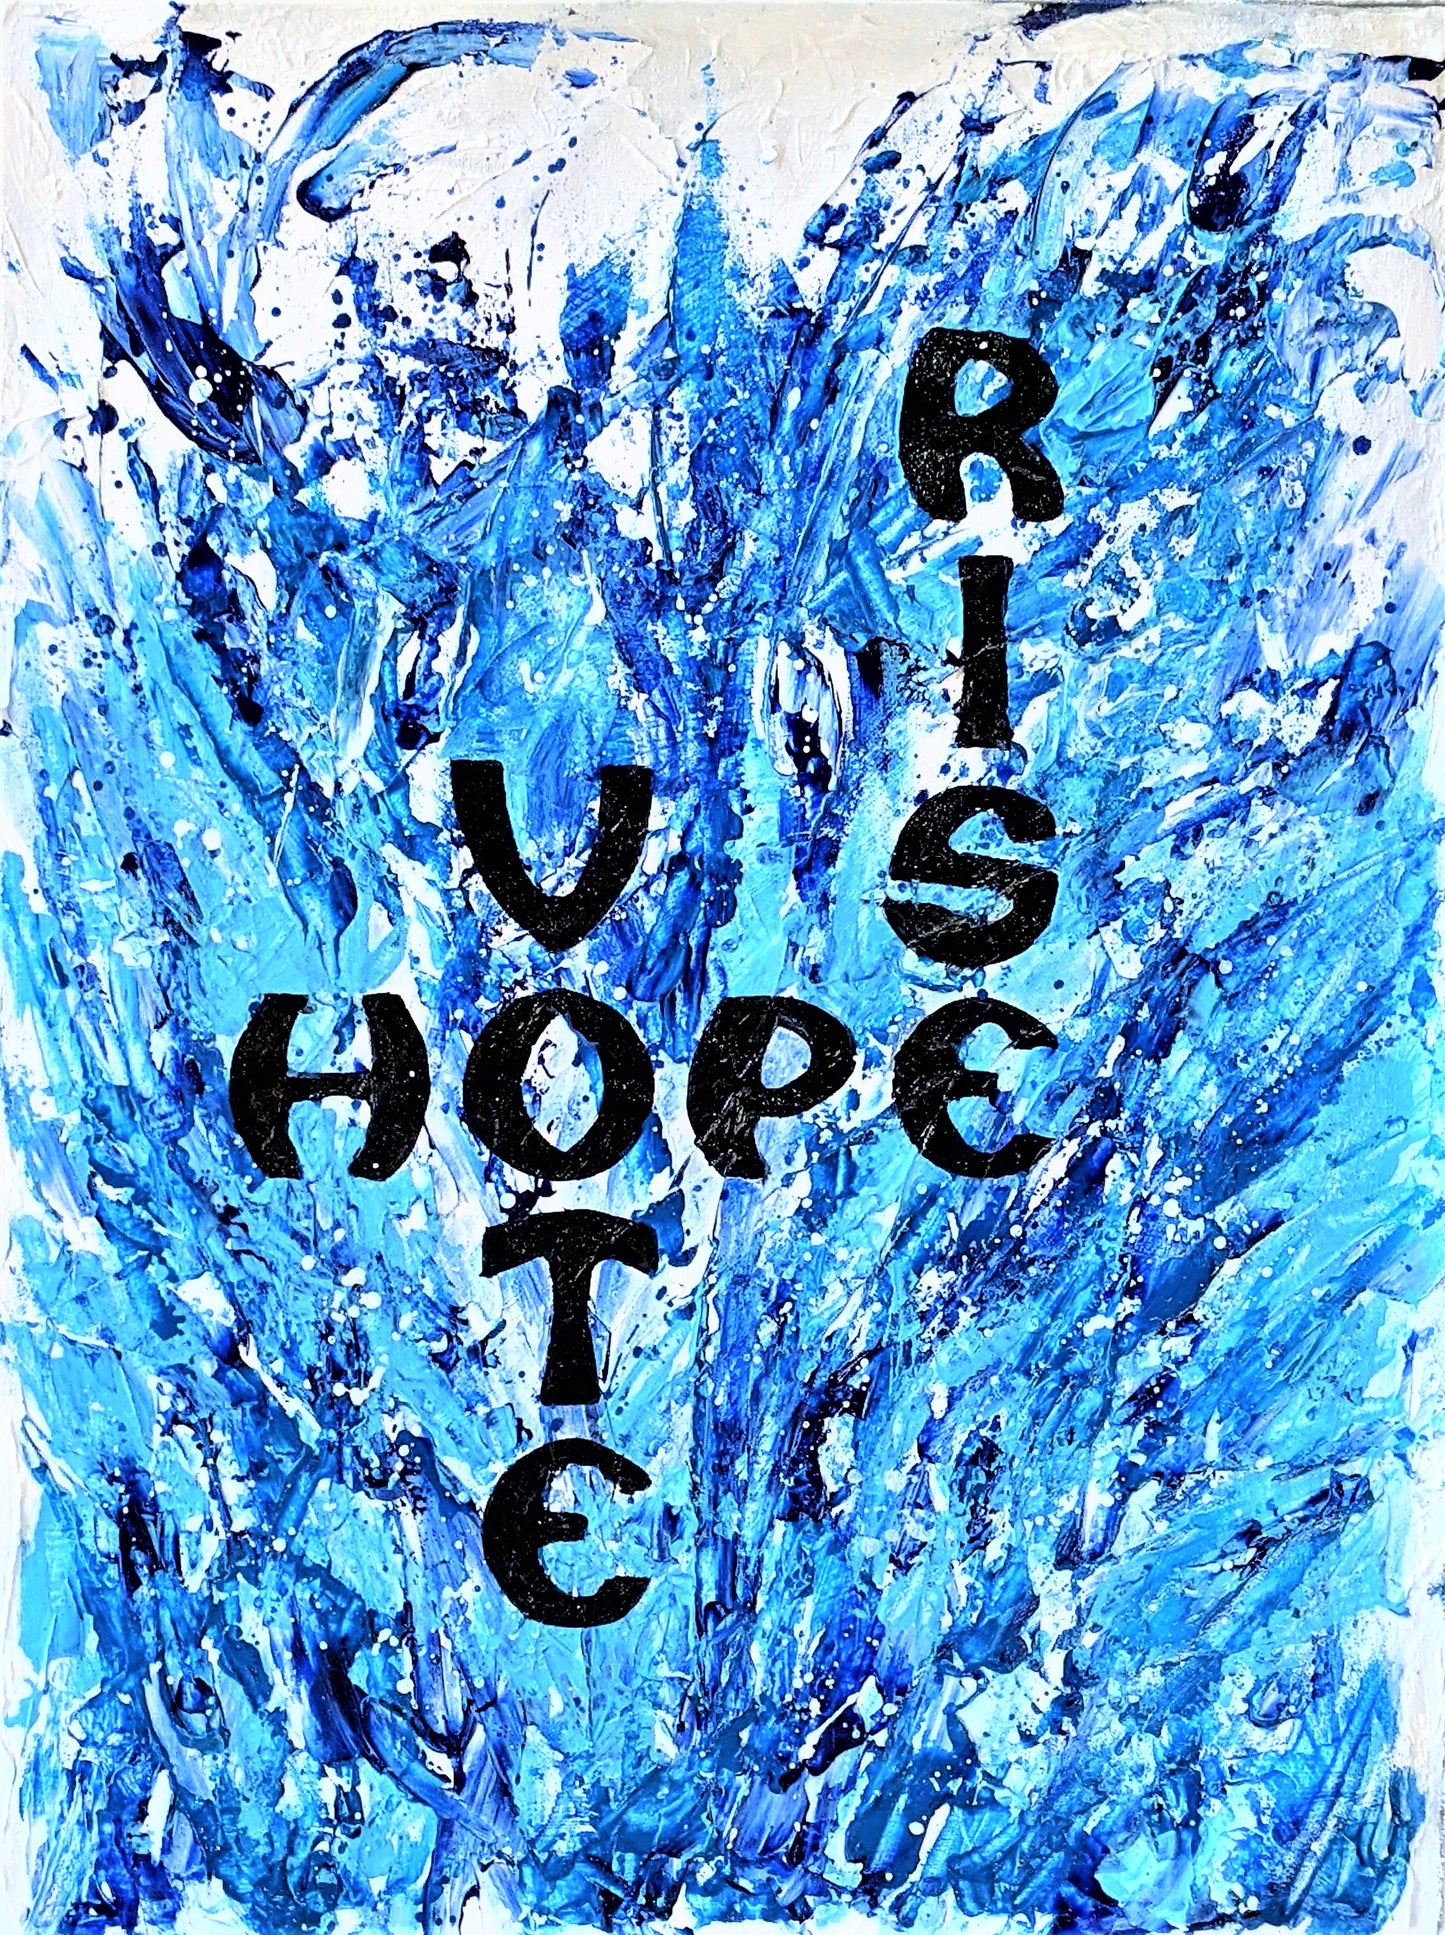 HopeVoteRise2020 #putartinyouryard project piece acrylic painting on gessoed cloth